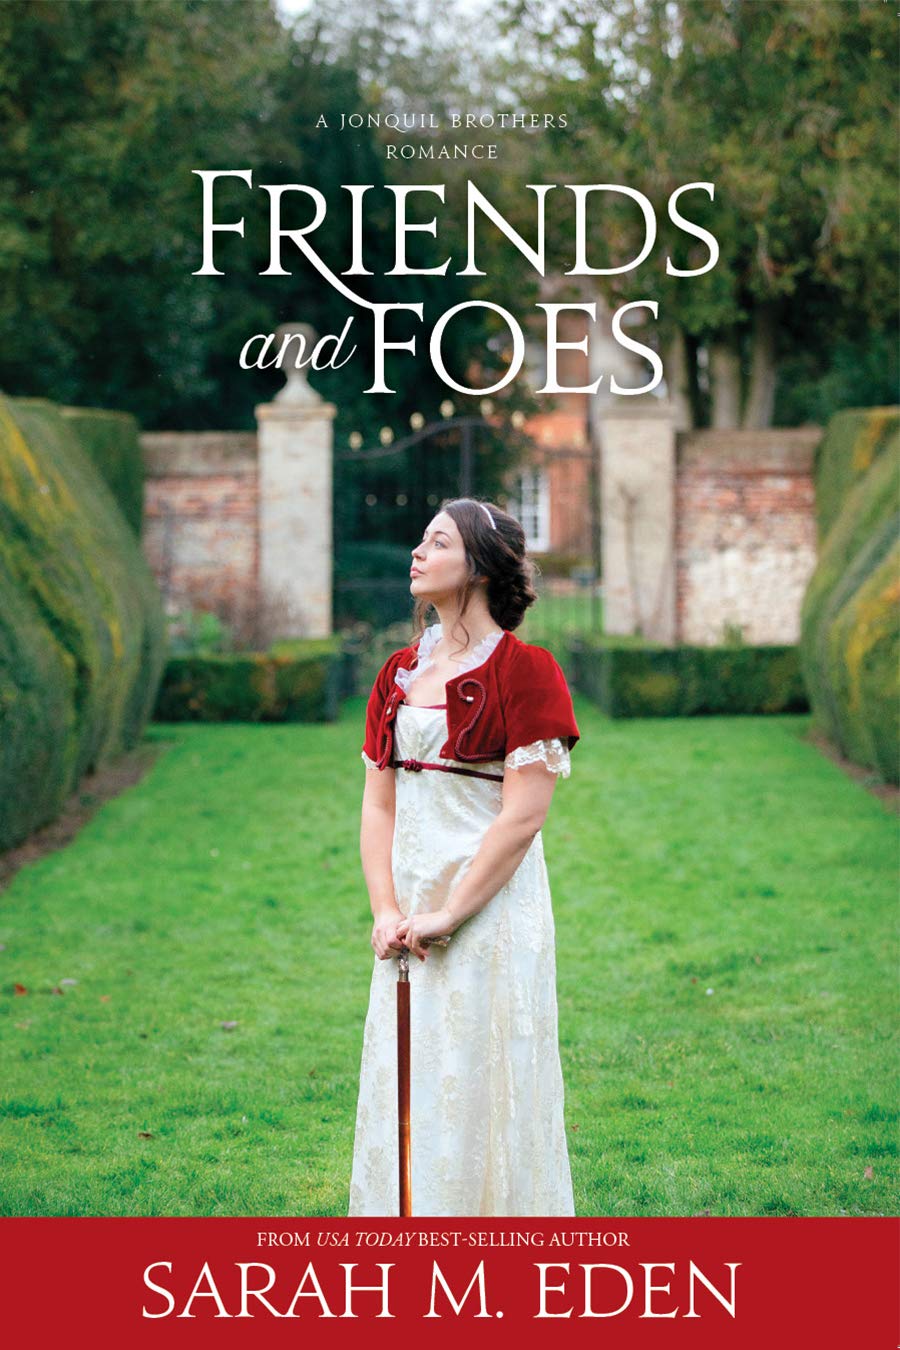 Book 1: Friends & Foes